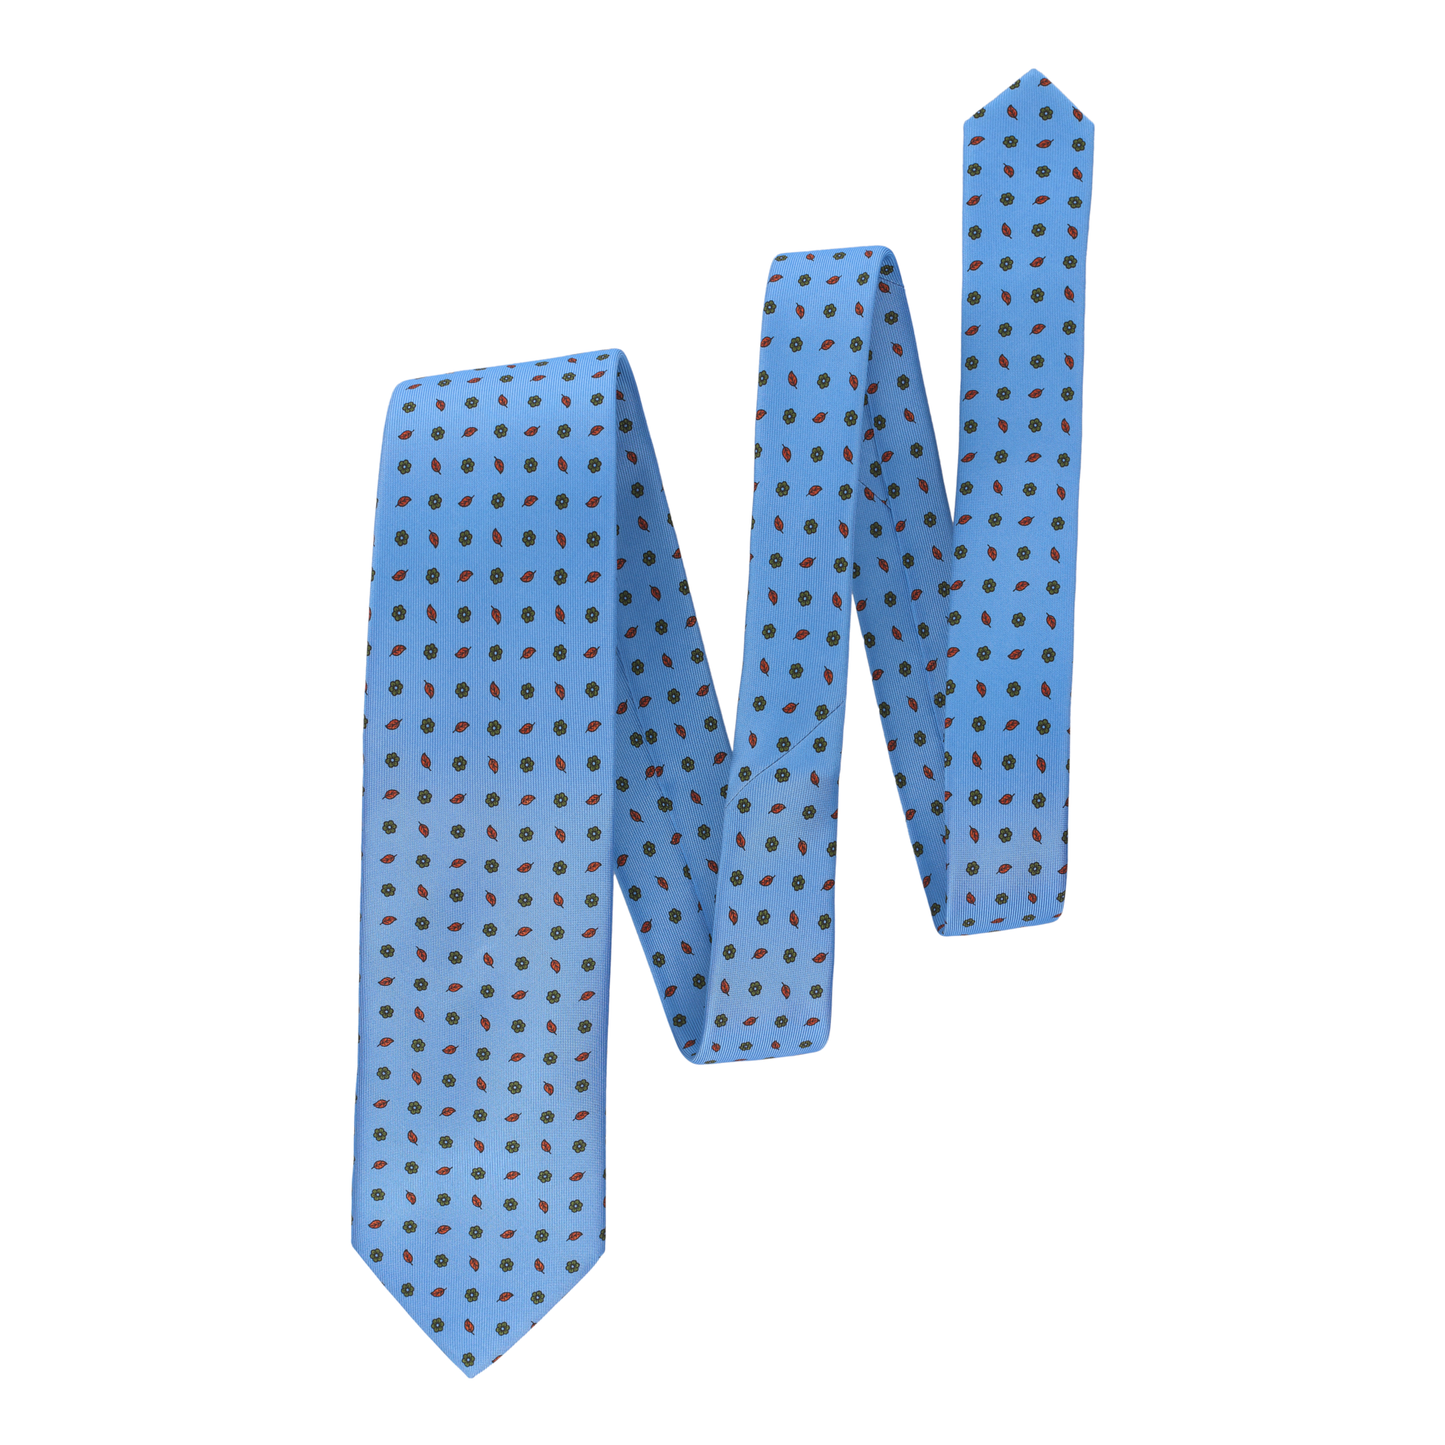 Printed Blue Tie with Leaf Design